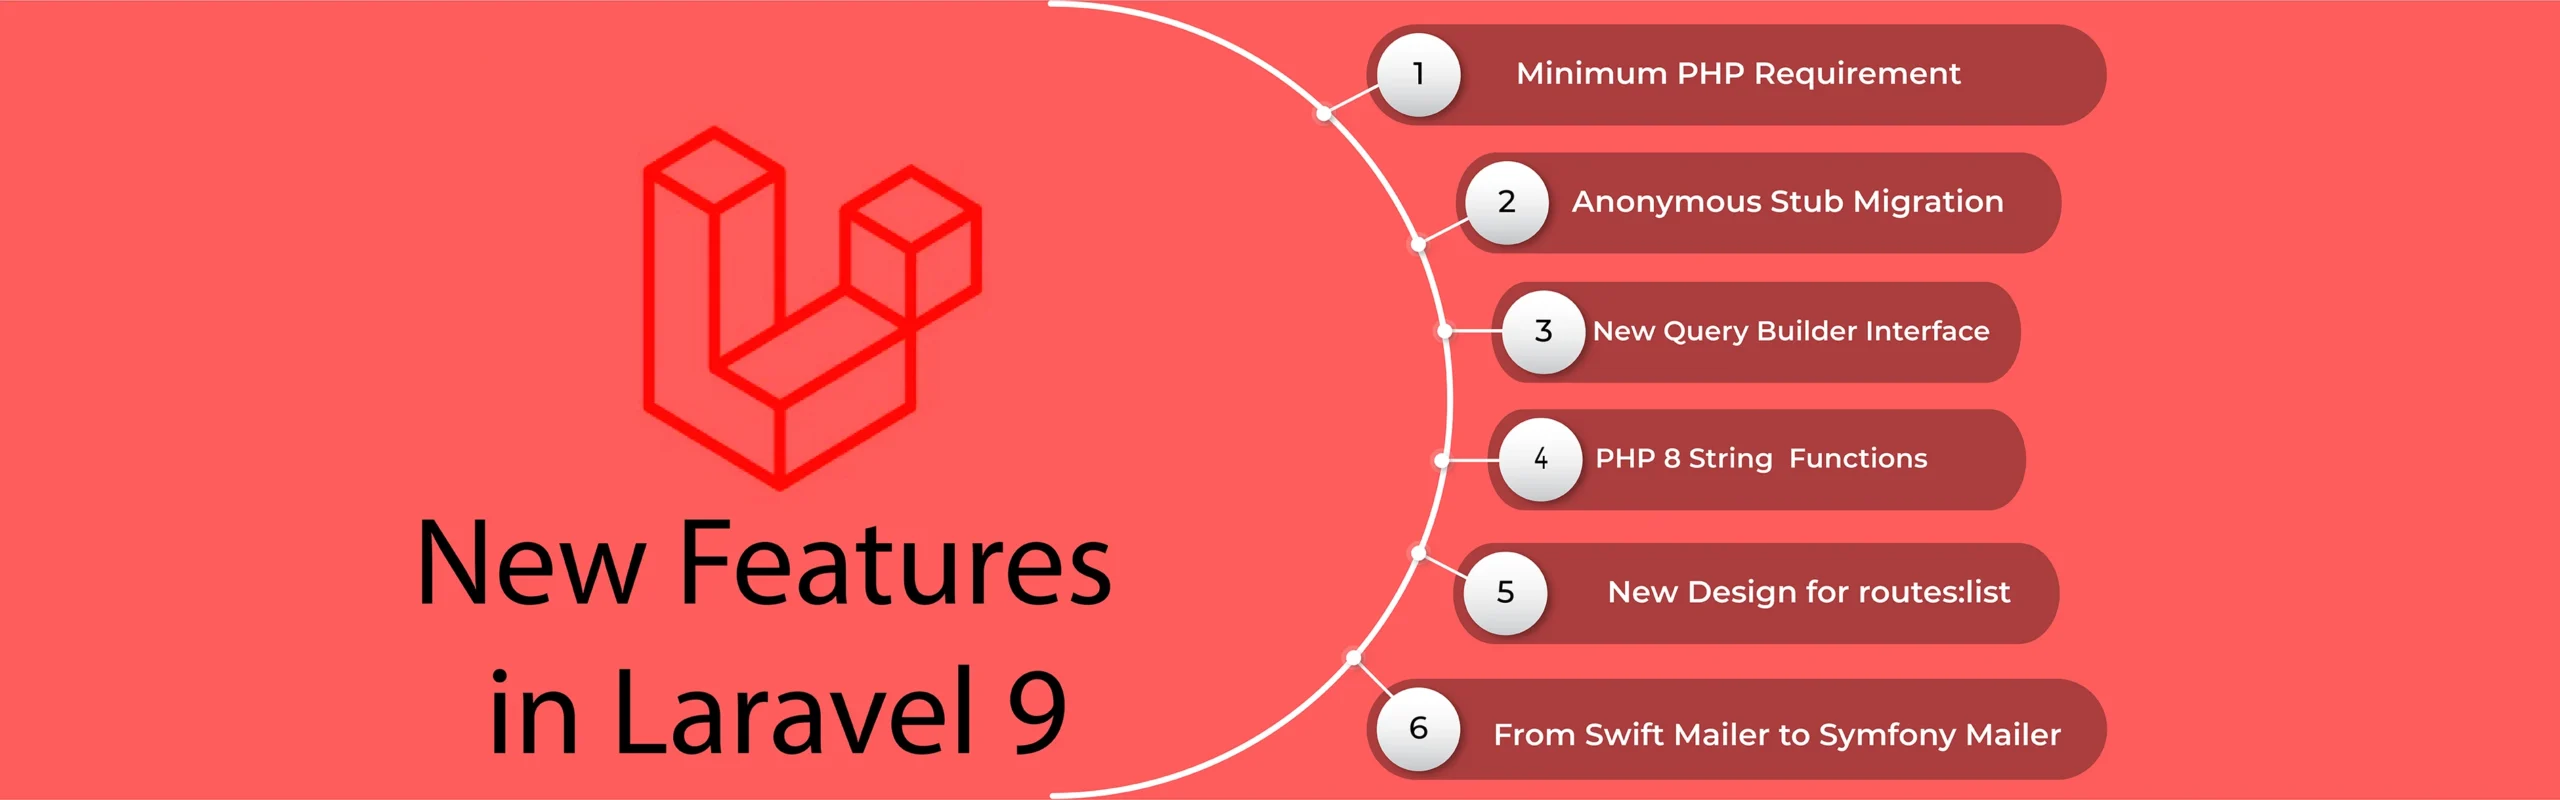 Features Of Laravel 9